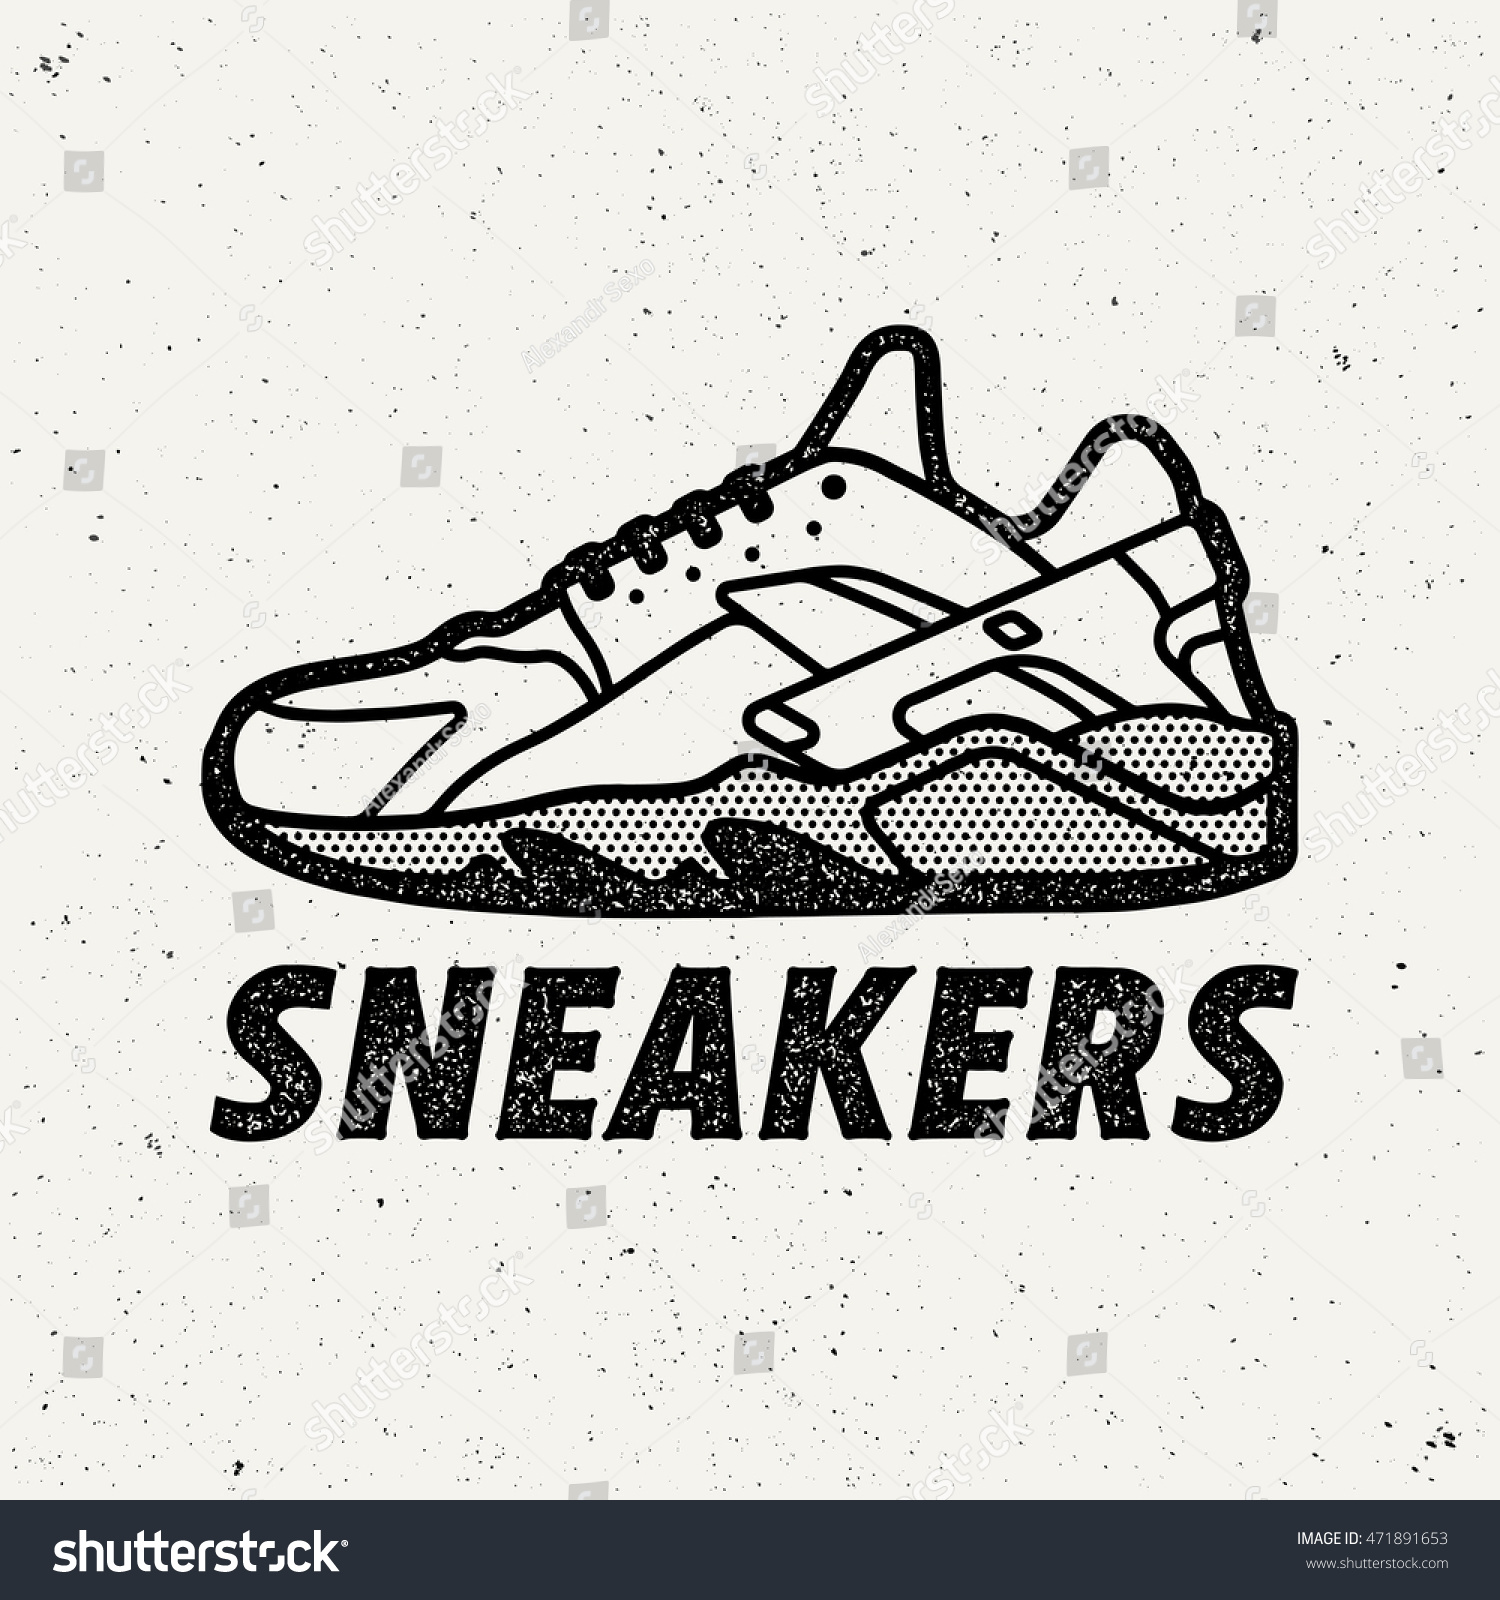 Sneakers logo. Логотип кроссовок. Логотип магазина кроссовок. Логотип кроссовок для интернет магазина. Кроссовки с надписями.